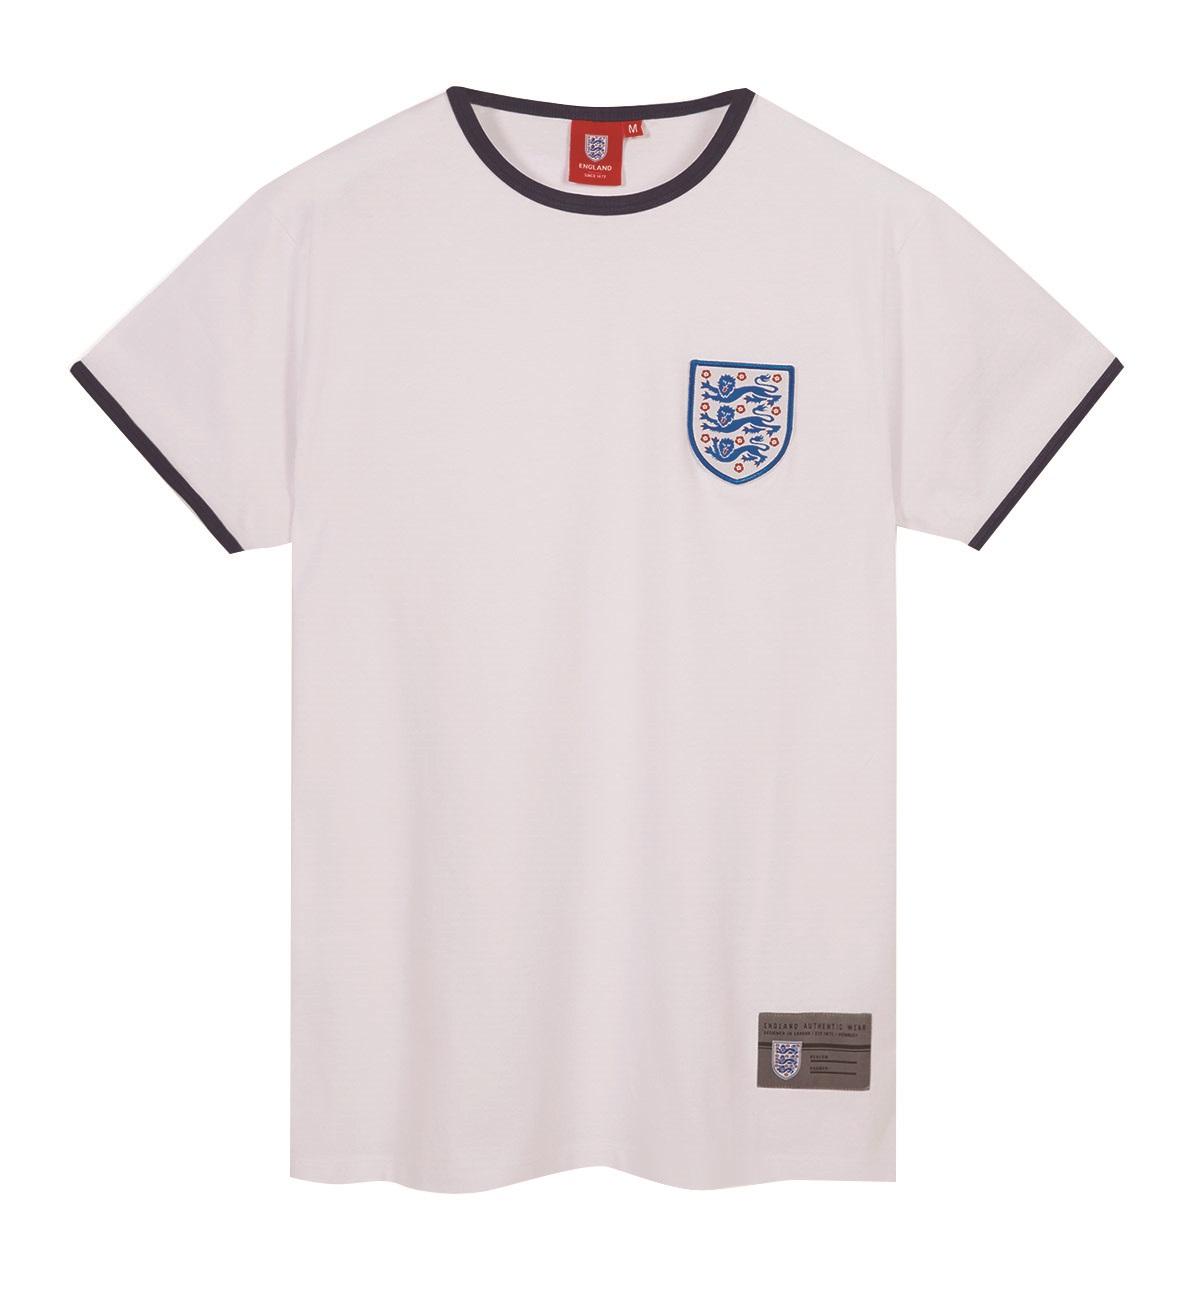 Primark, England football shirt, £10